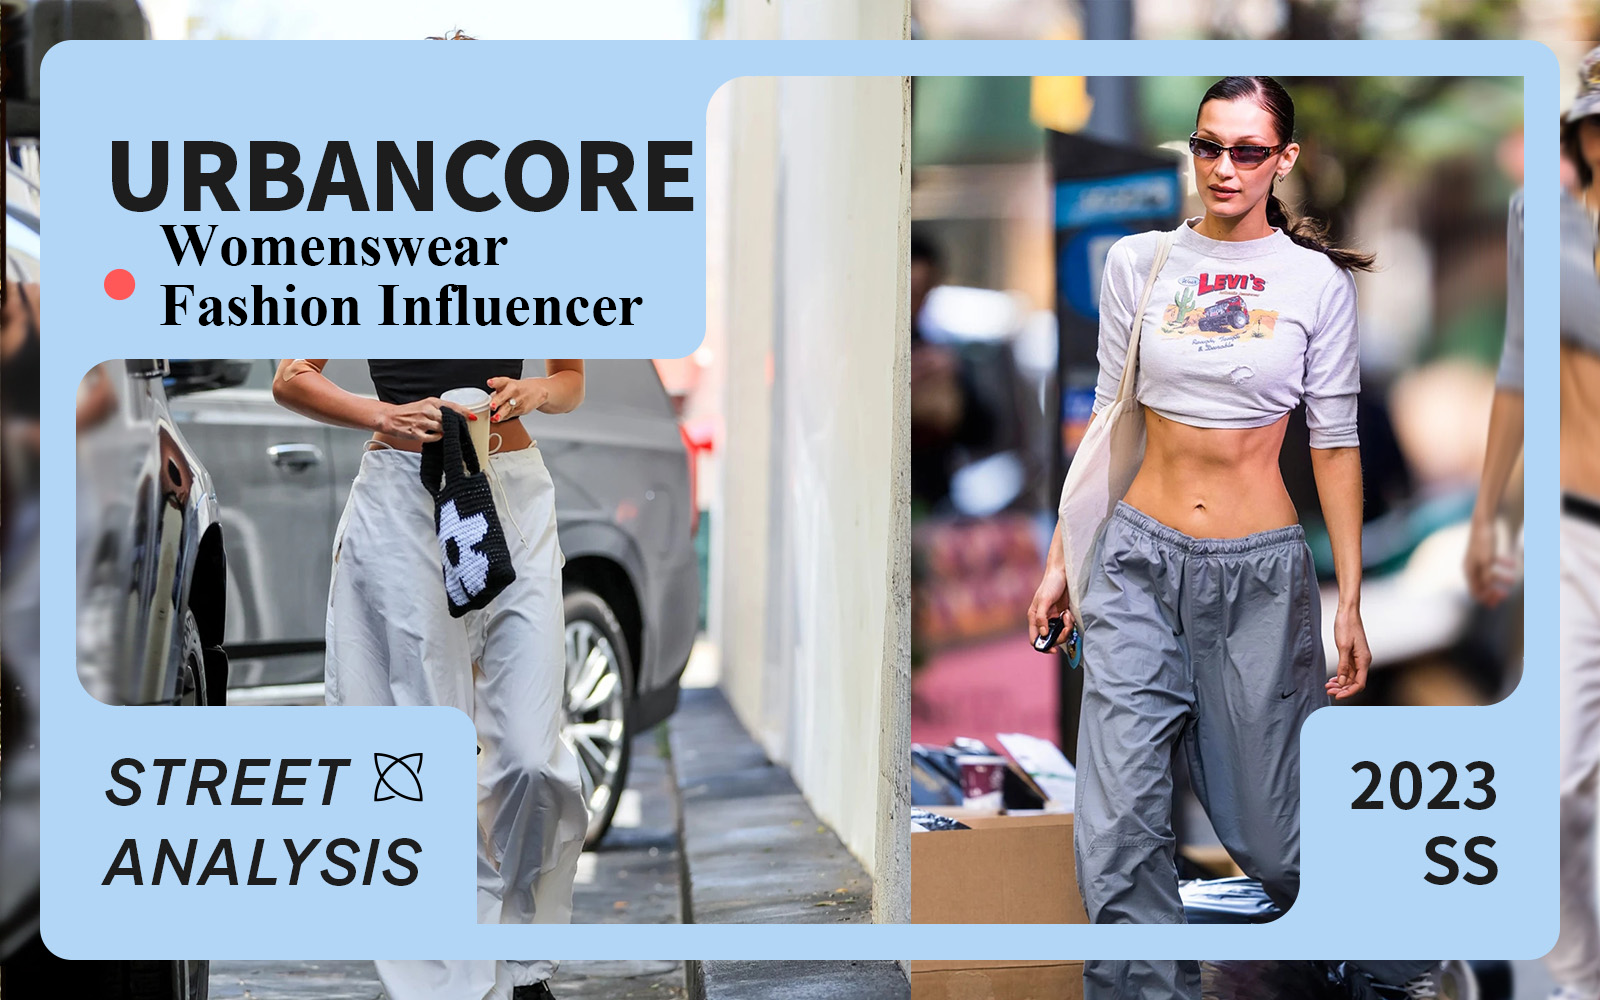 Urbancore -- The Analysis of Womenswear Fashion Influencer